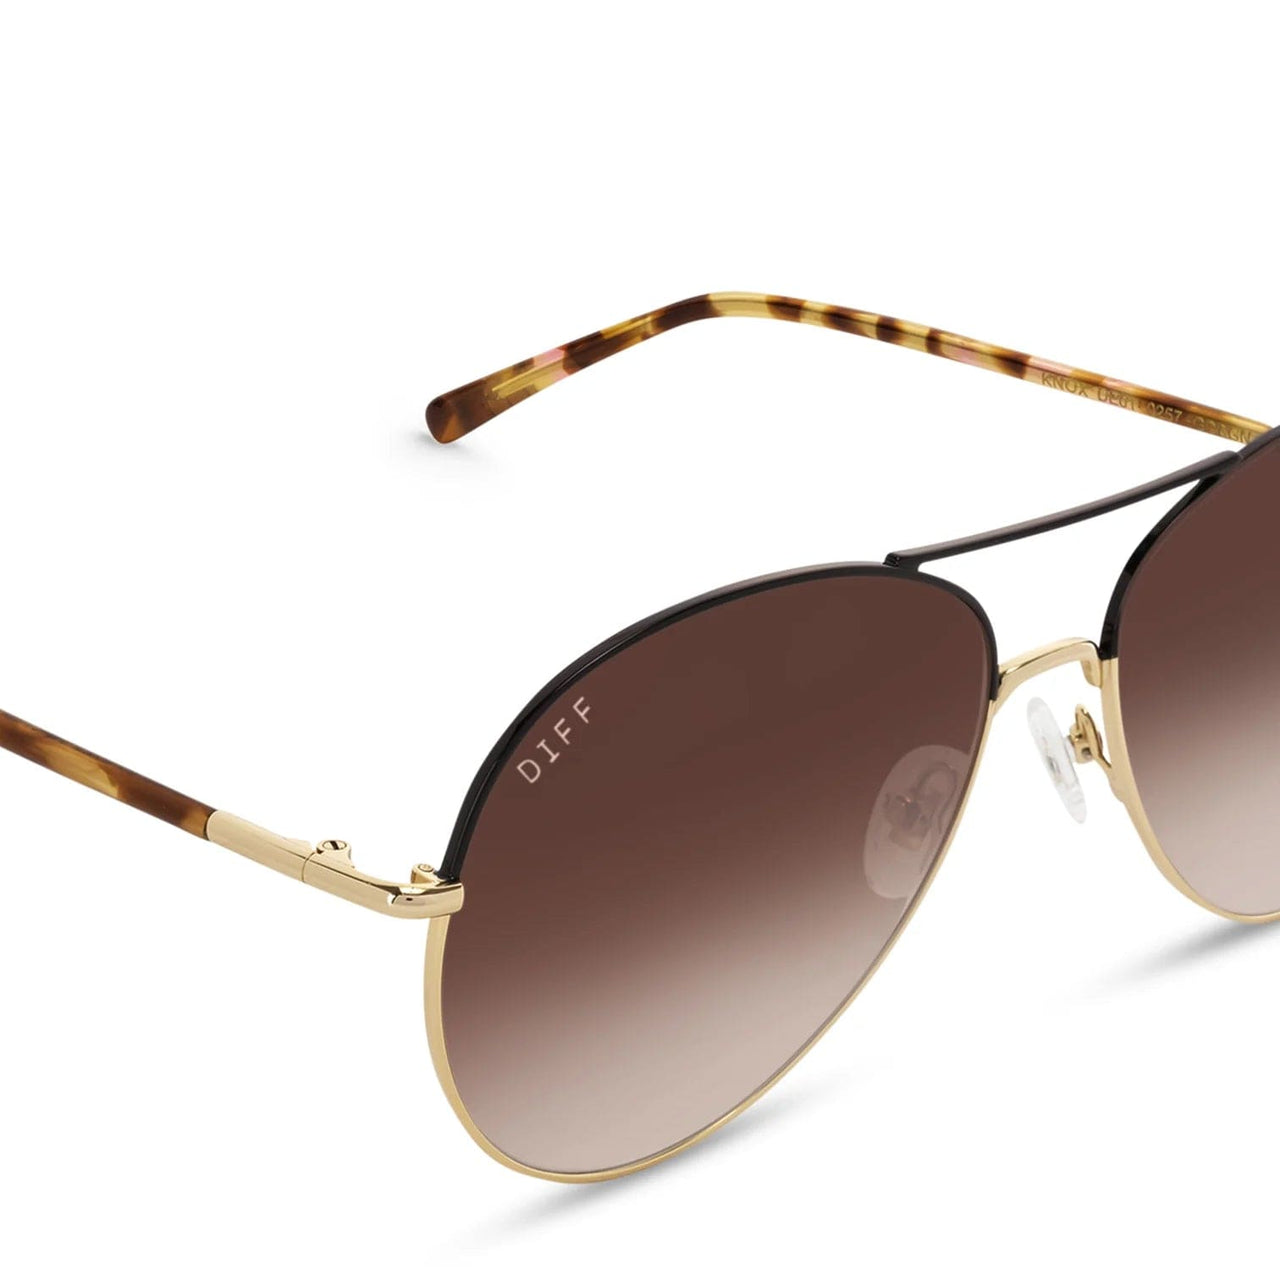 Knox Gold Brown Gradient Sunglasses, Sunglasses by DIFF Sunglasses | LIT Boutique